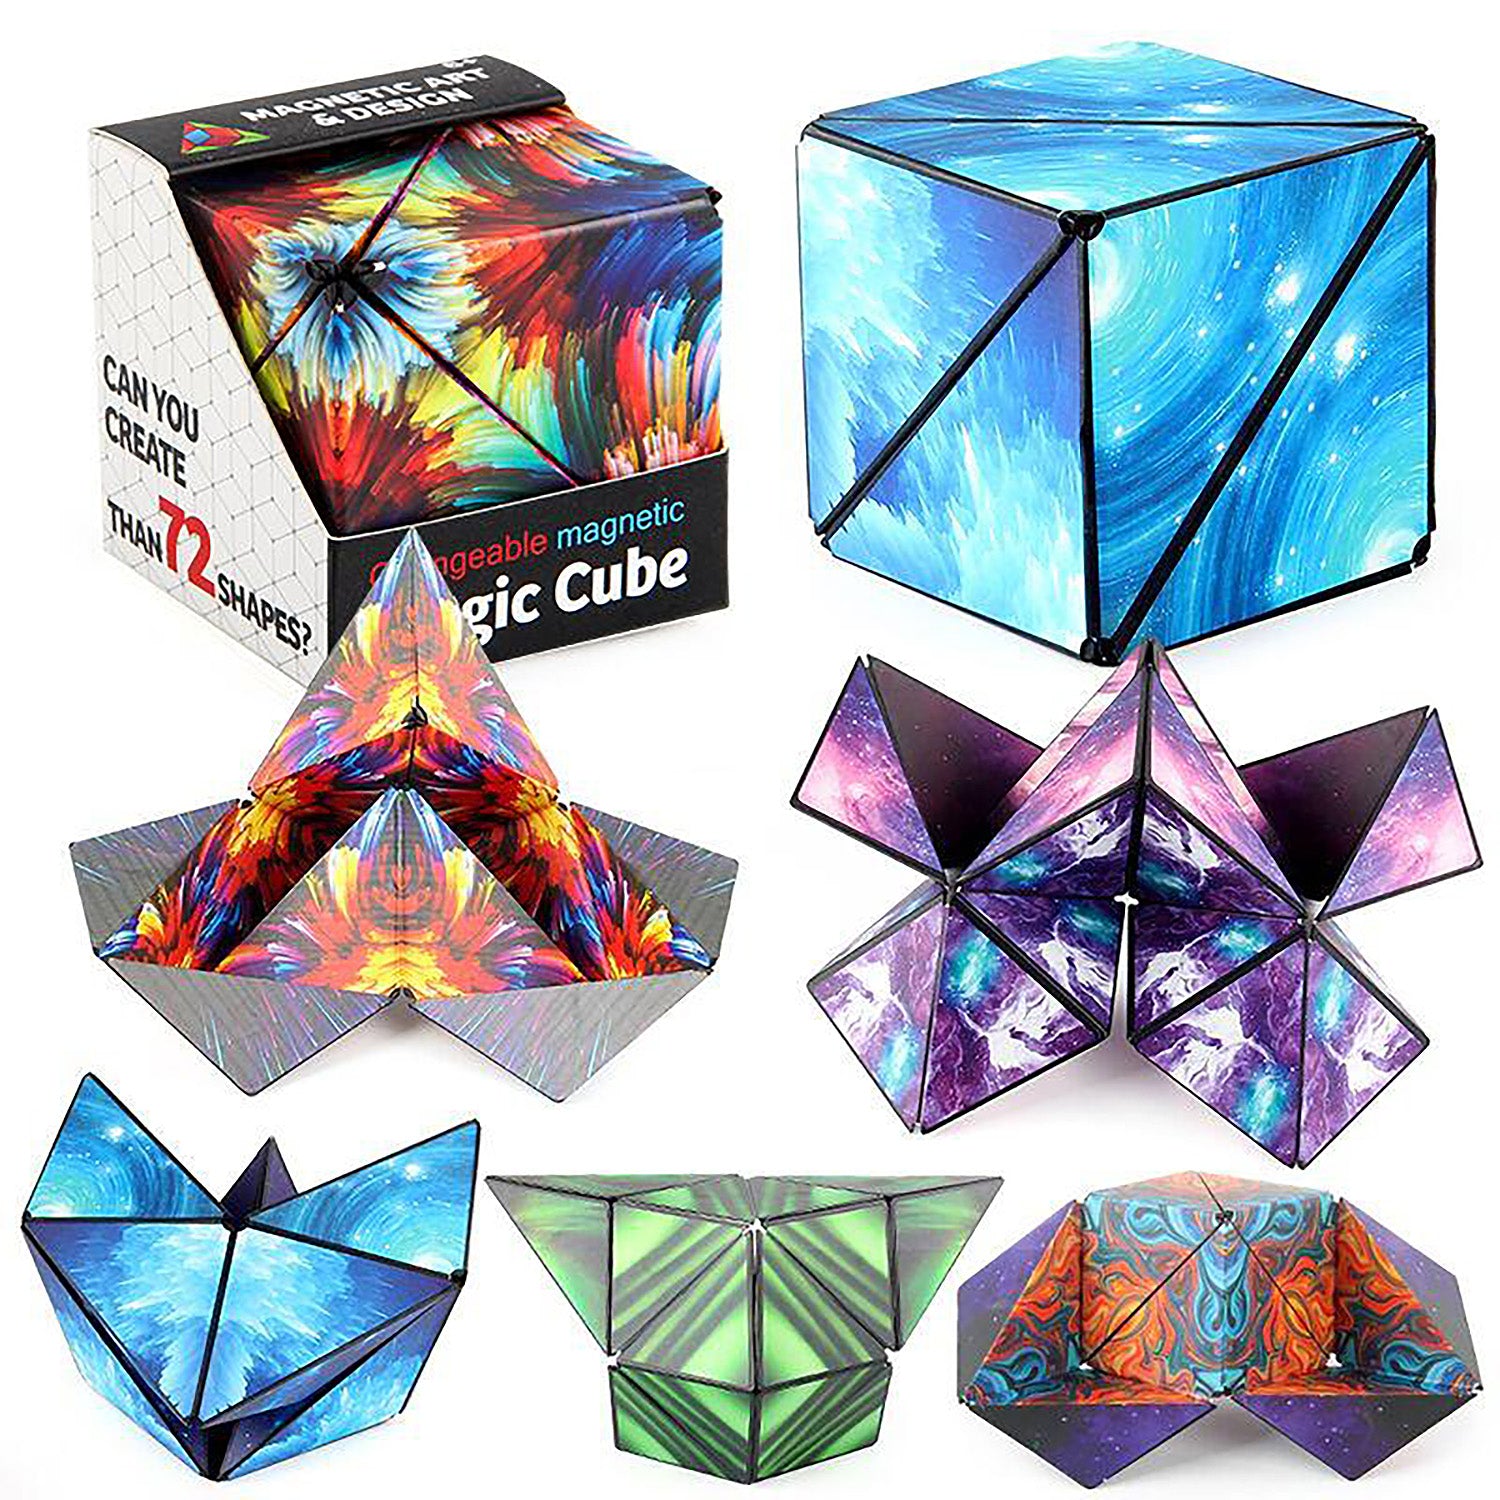 3D Changeable Magnetic Magic Cube, Shape Shifting Box Fidget Toy (Galactic Blue Version)